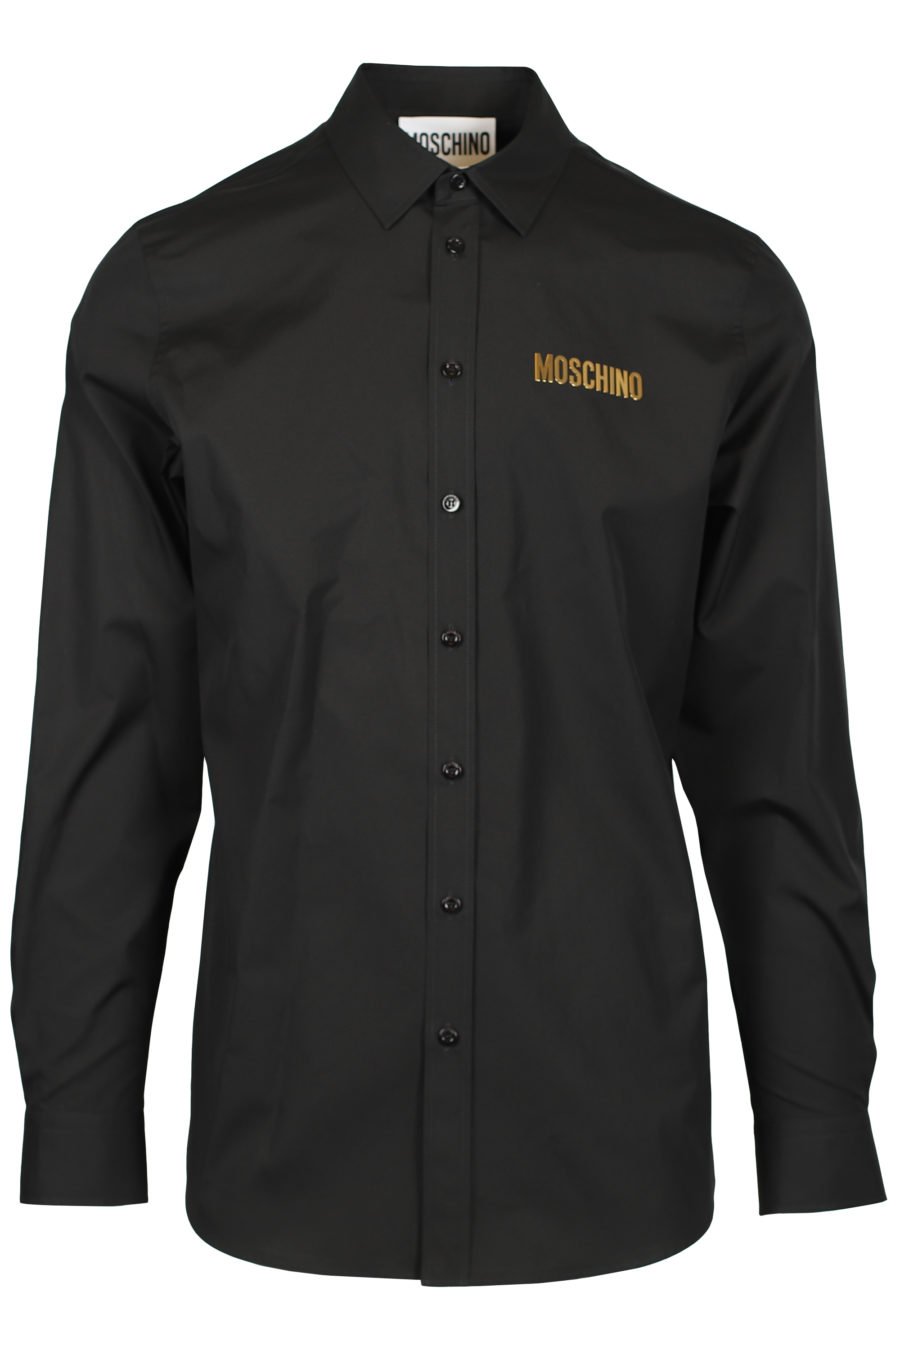 Black shirt with gold logo - IMG 2564